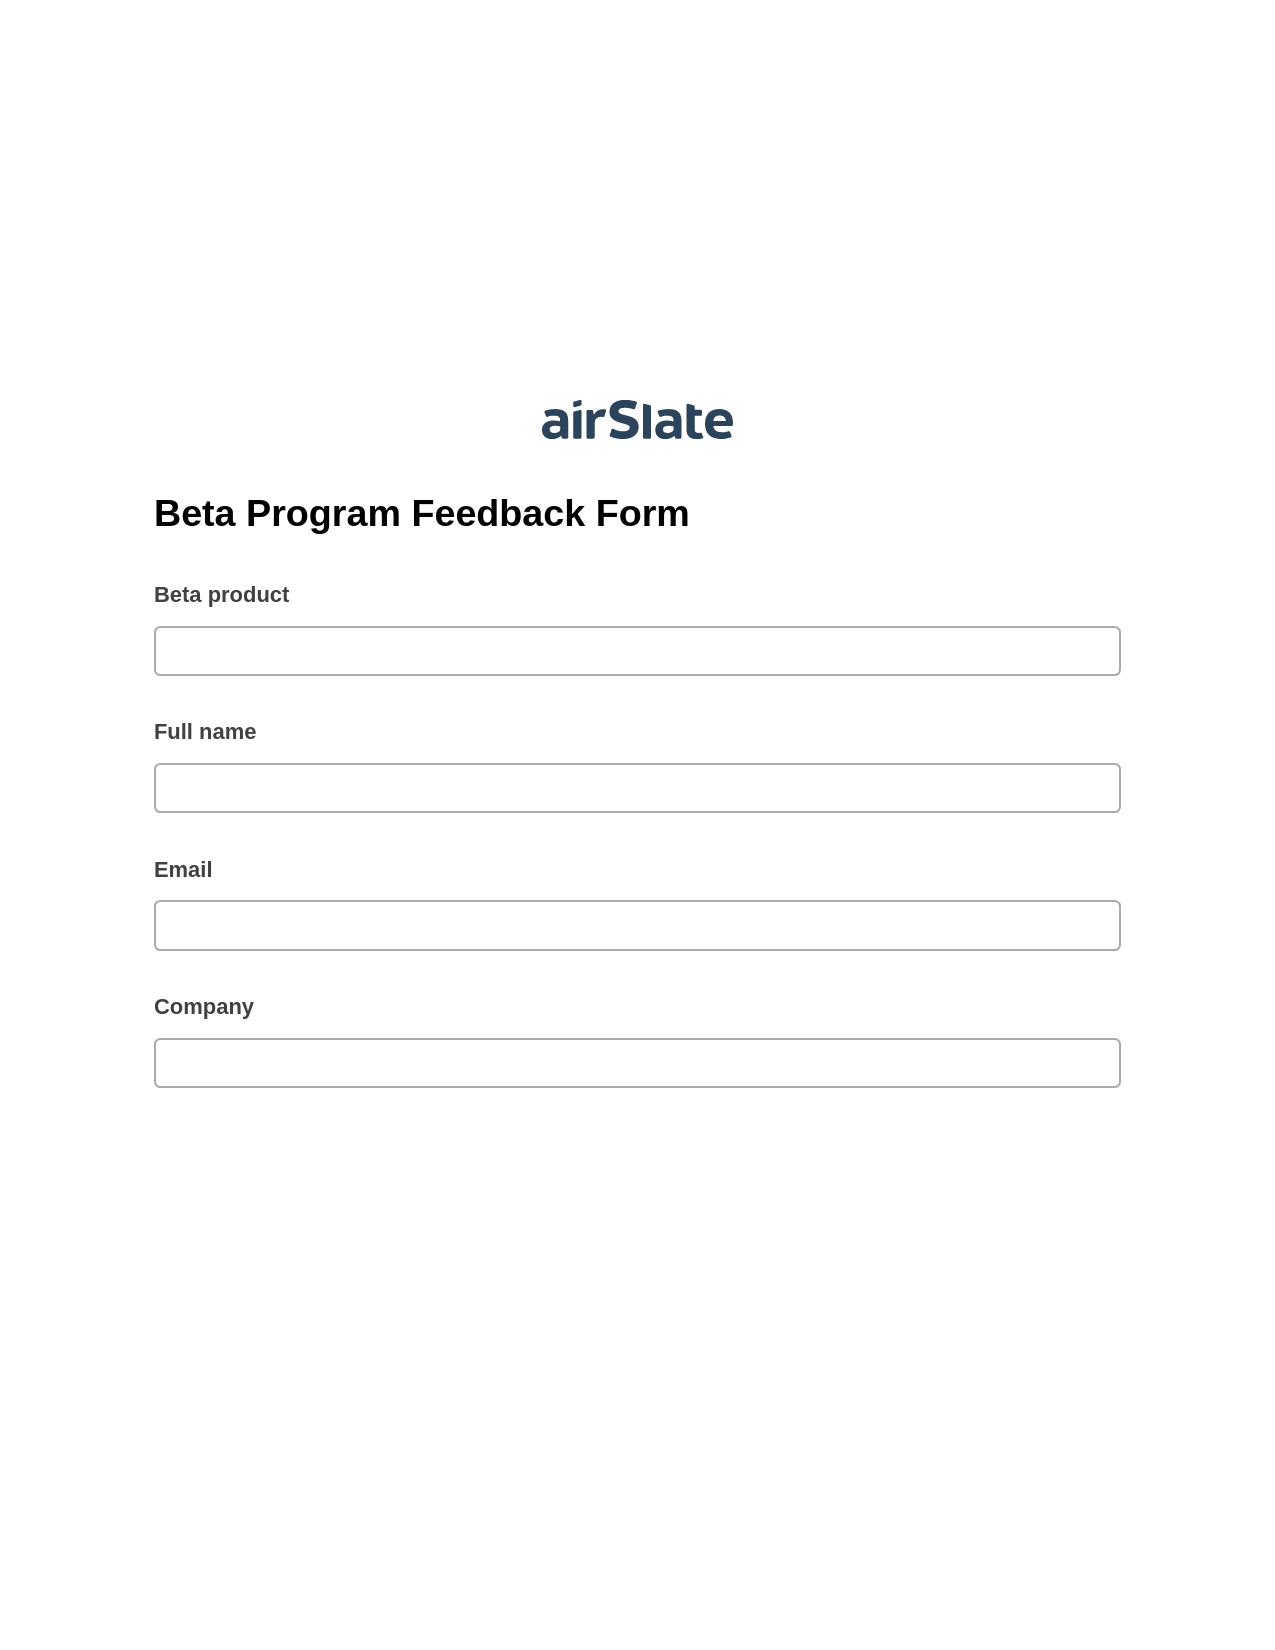 Multirole Beta Program Feedback Form Pre-fill Document Bot, Send a Slate to Salesforce Contact Bot, Dropbox Bot